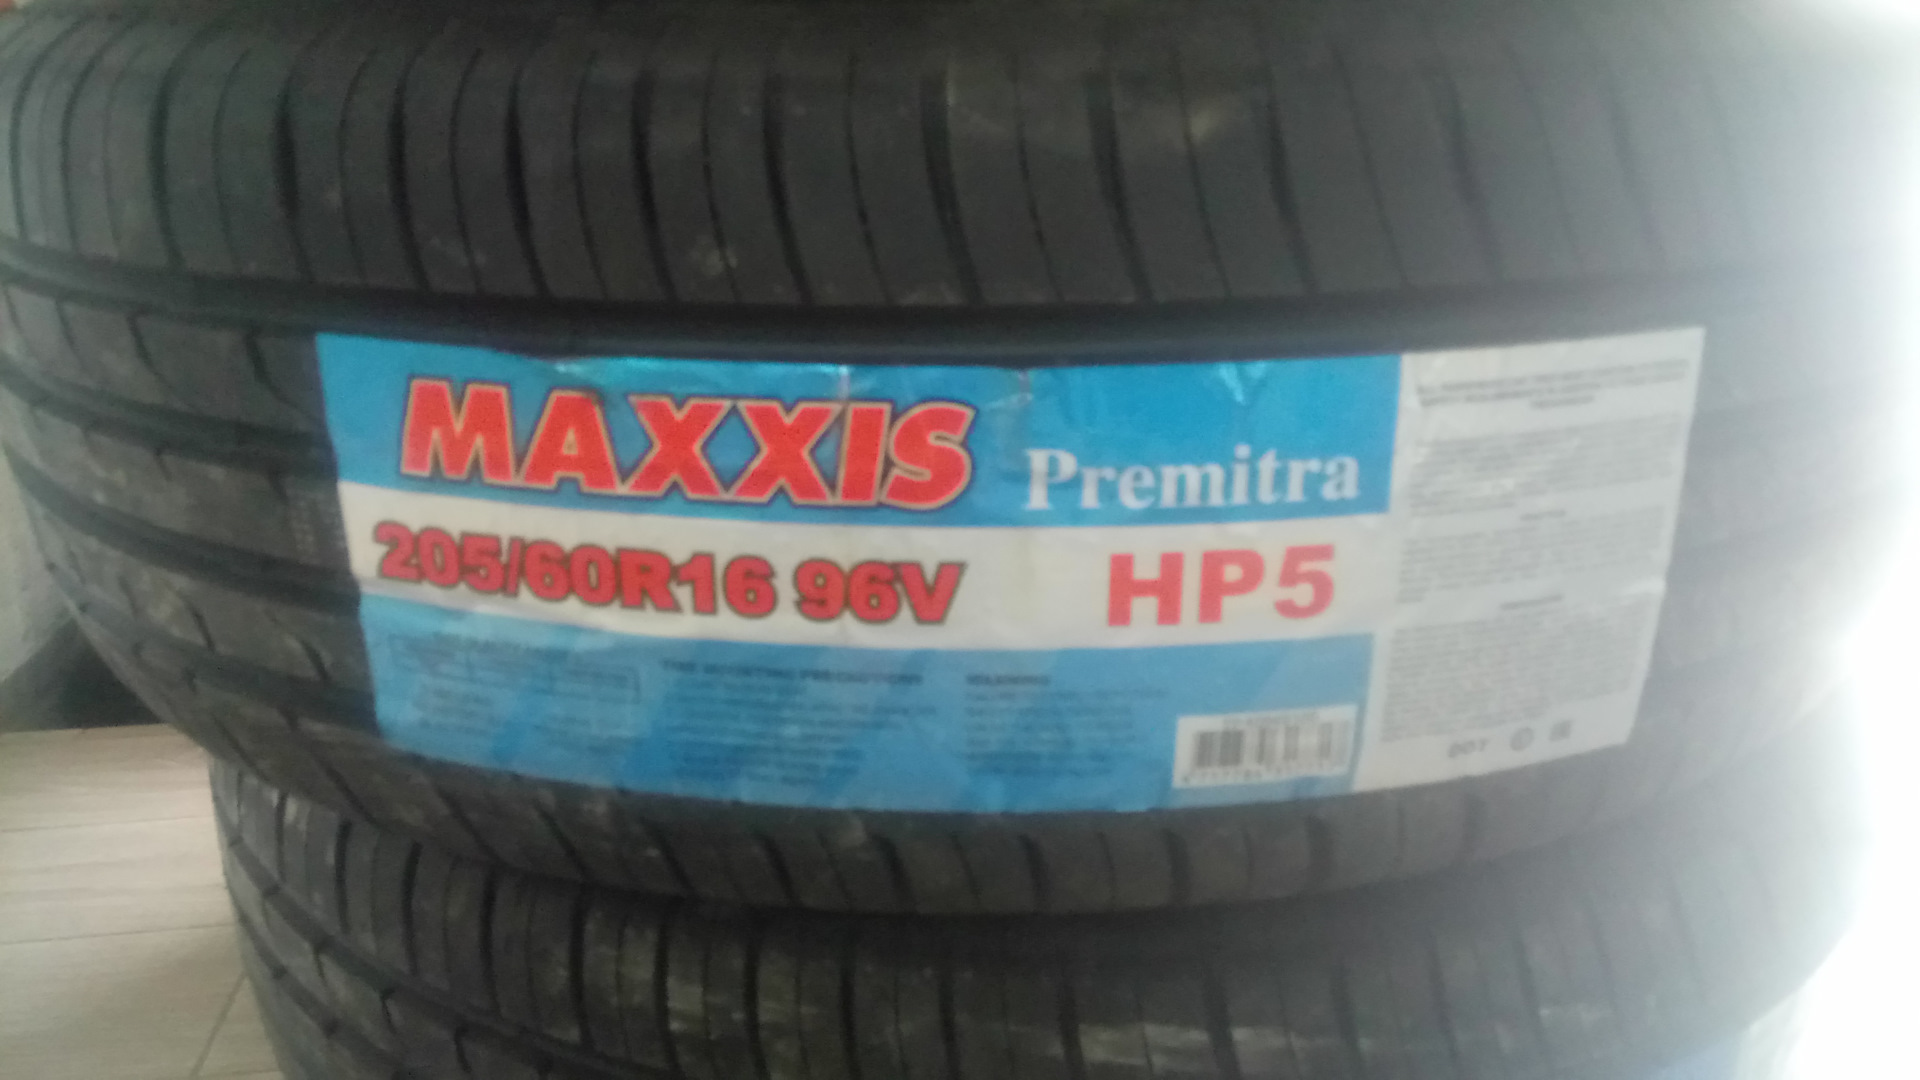 Maxxis premitra hp5 205 55 r16. Maxxis Premitra hp5. Maxxis Premitra hp5 драйв2. Maxxis Premitra hp5 XL. Maxxis hp5 драйв 2.